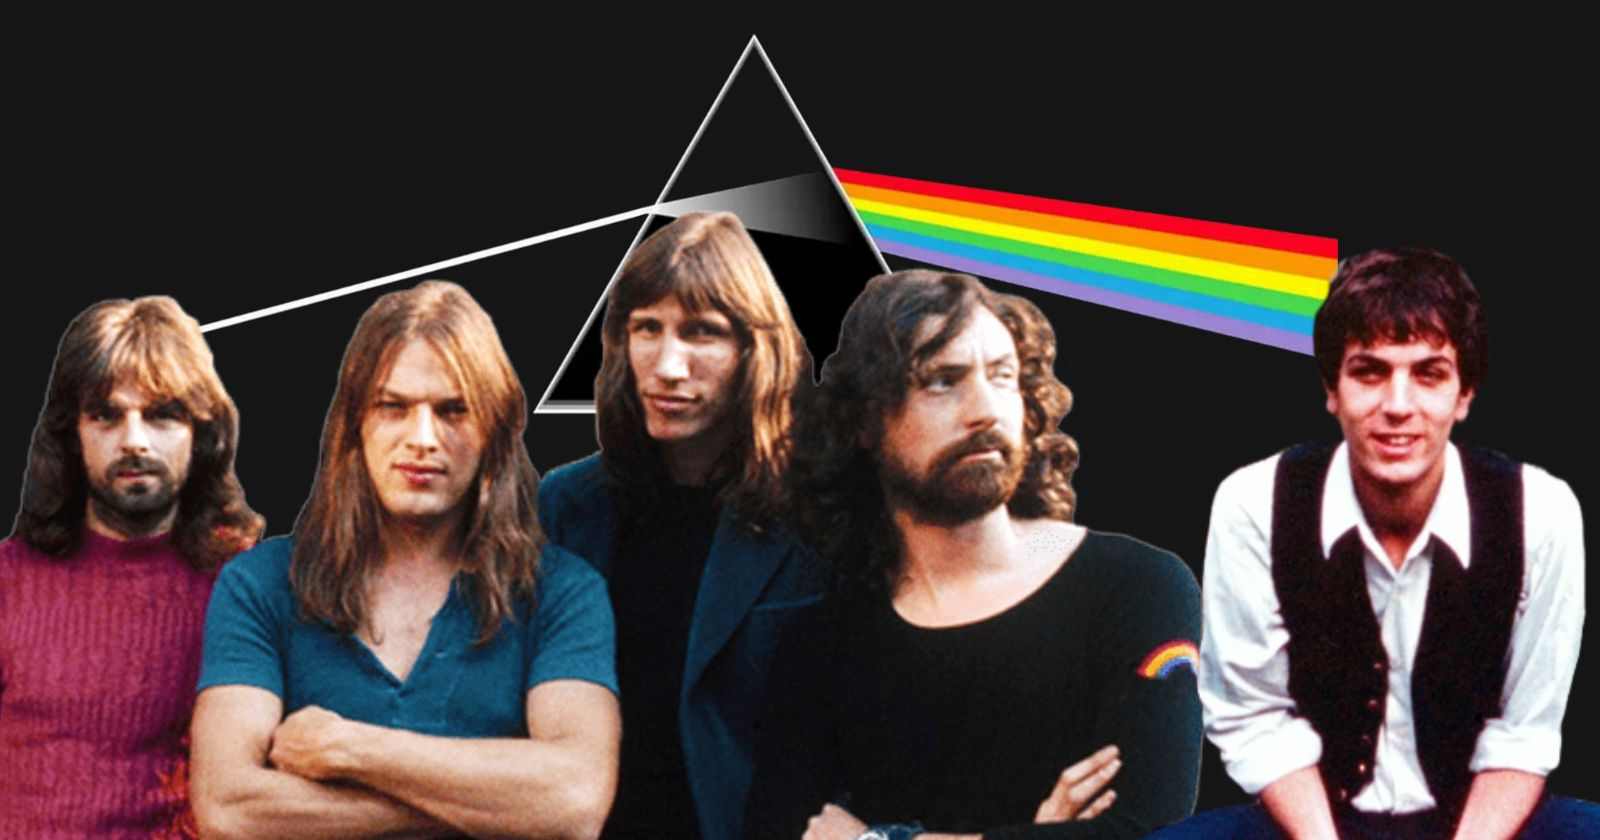 Pink Floyd vocalists